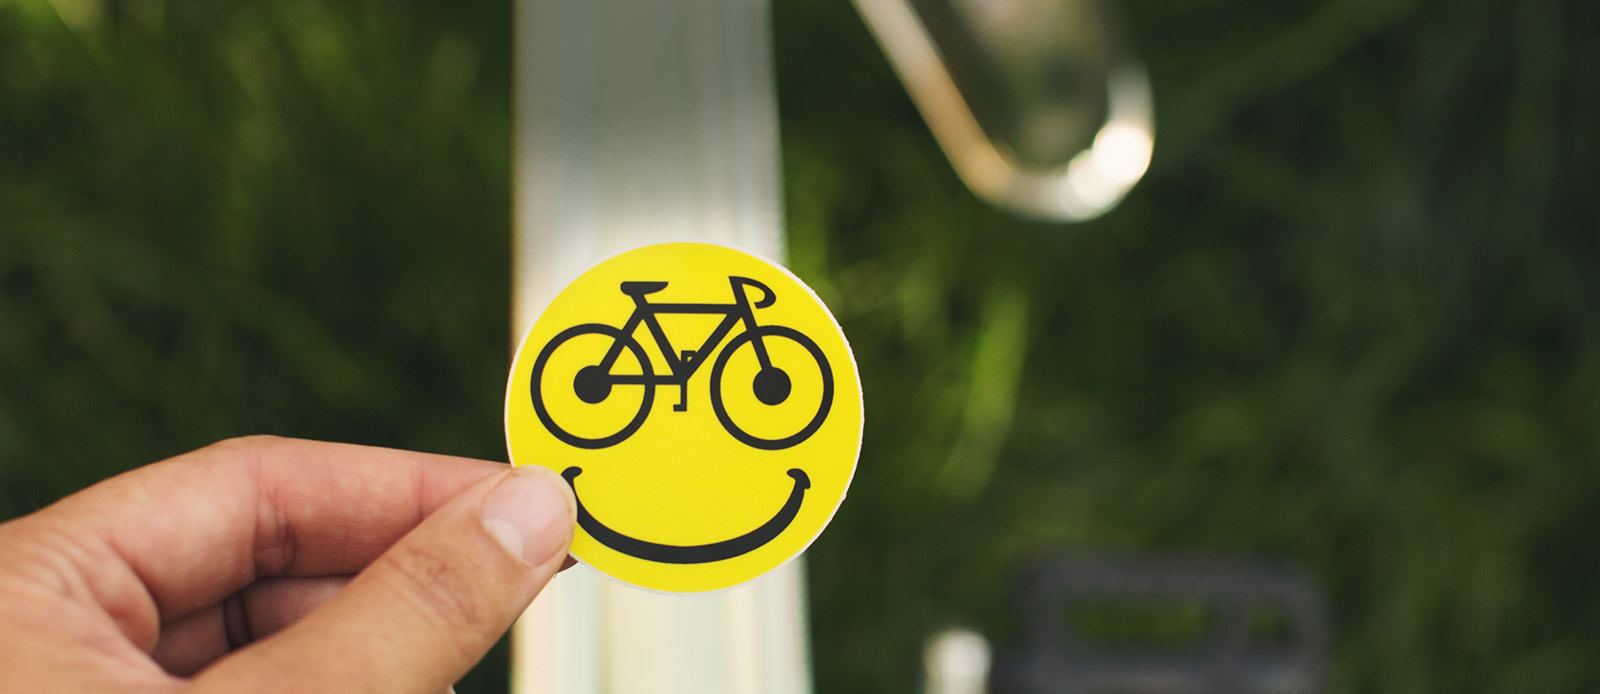 Autocolantes personalizados para bicicletas